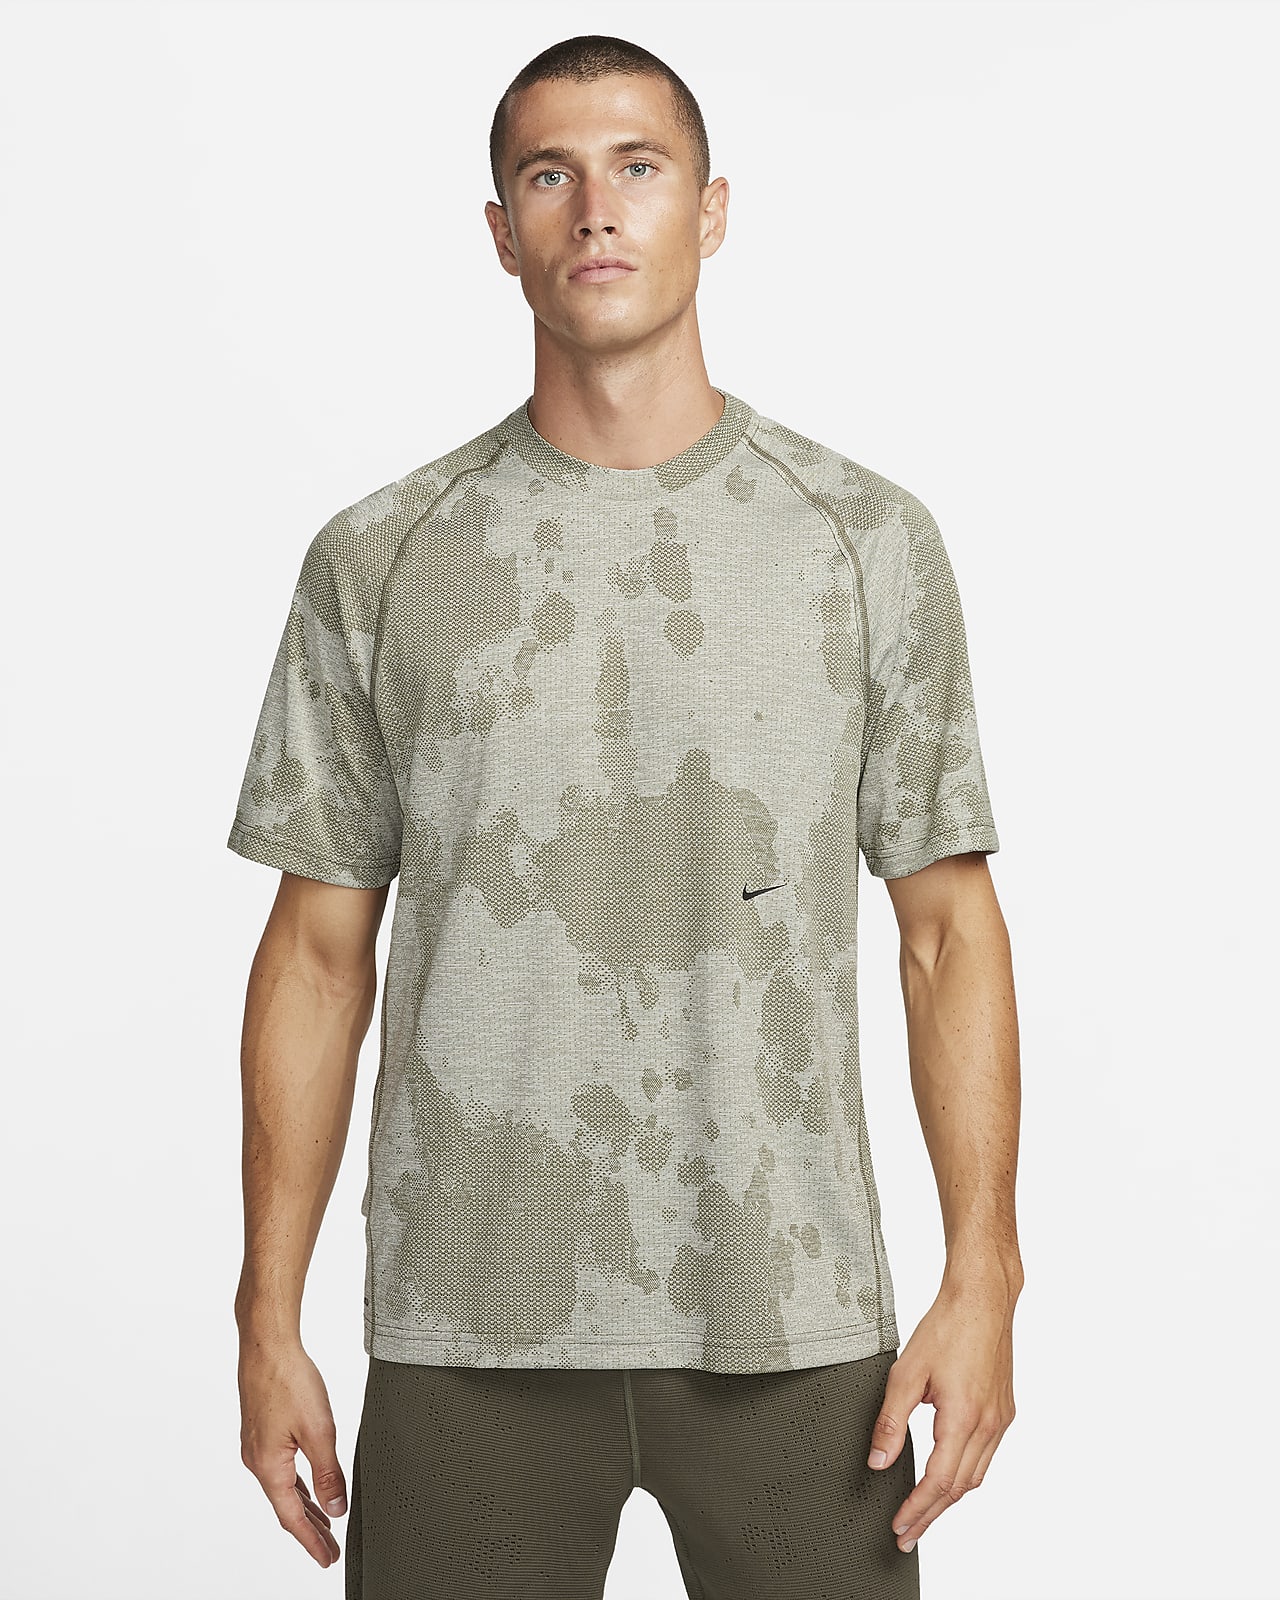 Lycra Cotton Printed Mens Down Shoulder T shirts